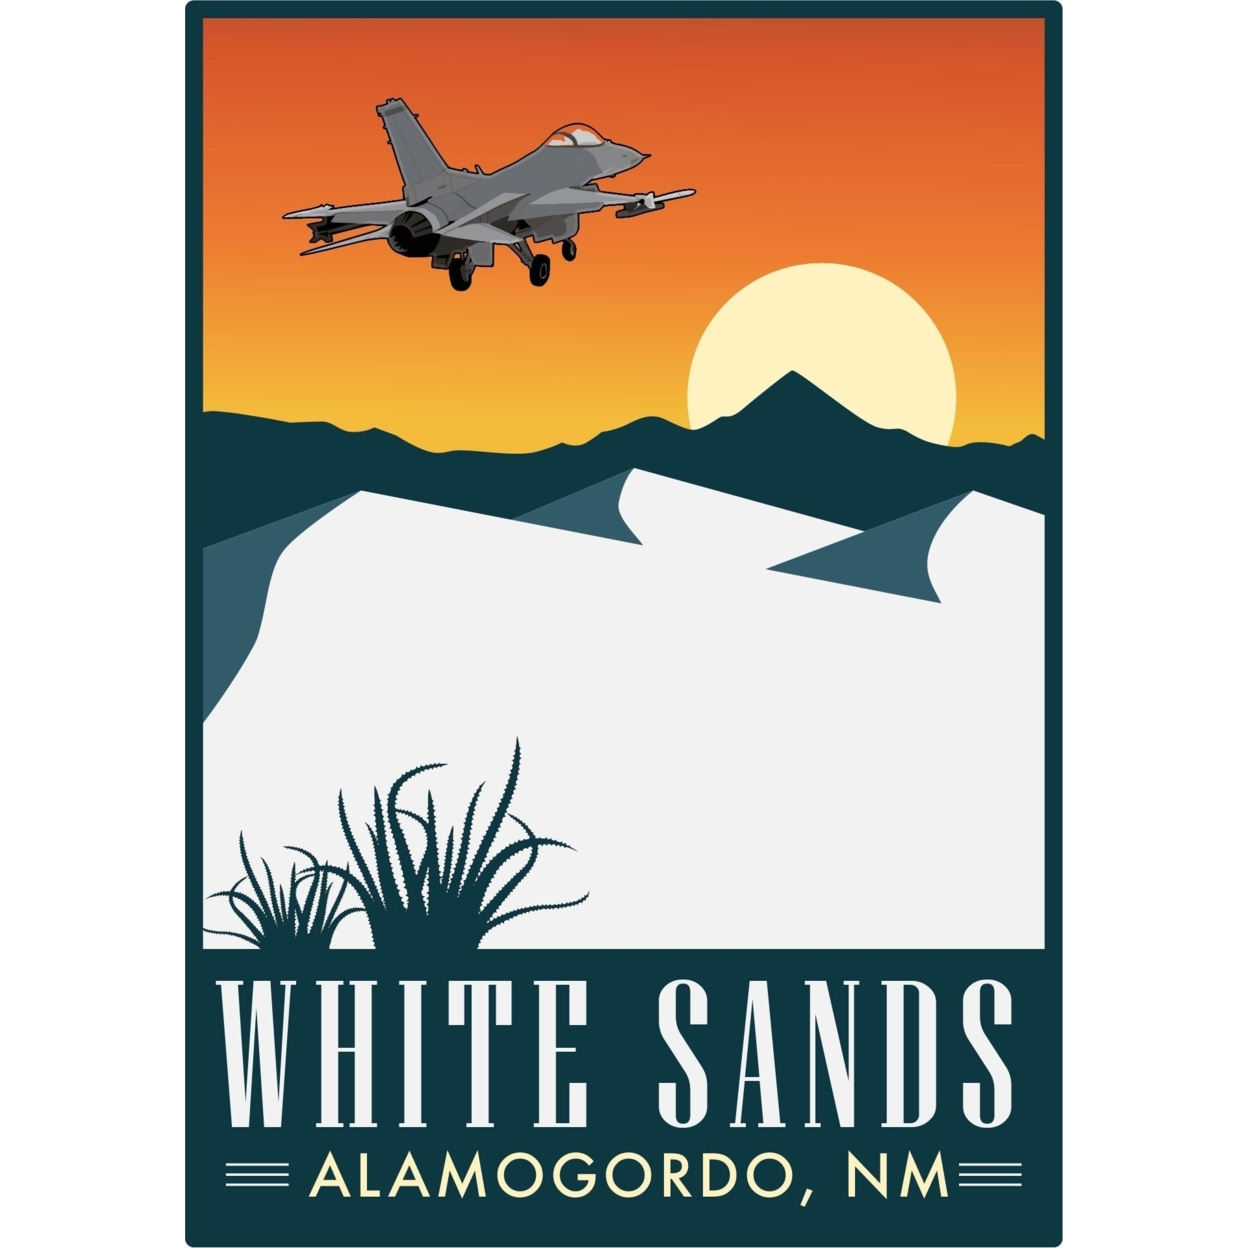 White Sands Alamogordo New Mexico Souvenir 4-Inch Vinyl Decal Sticker - Design A